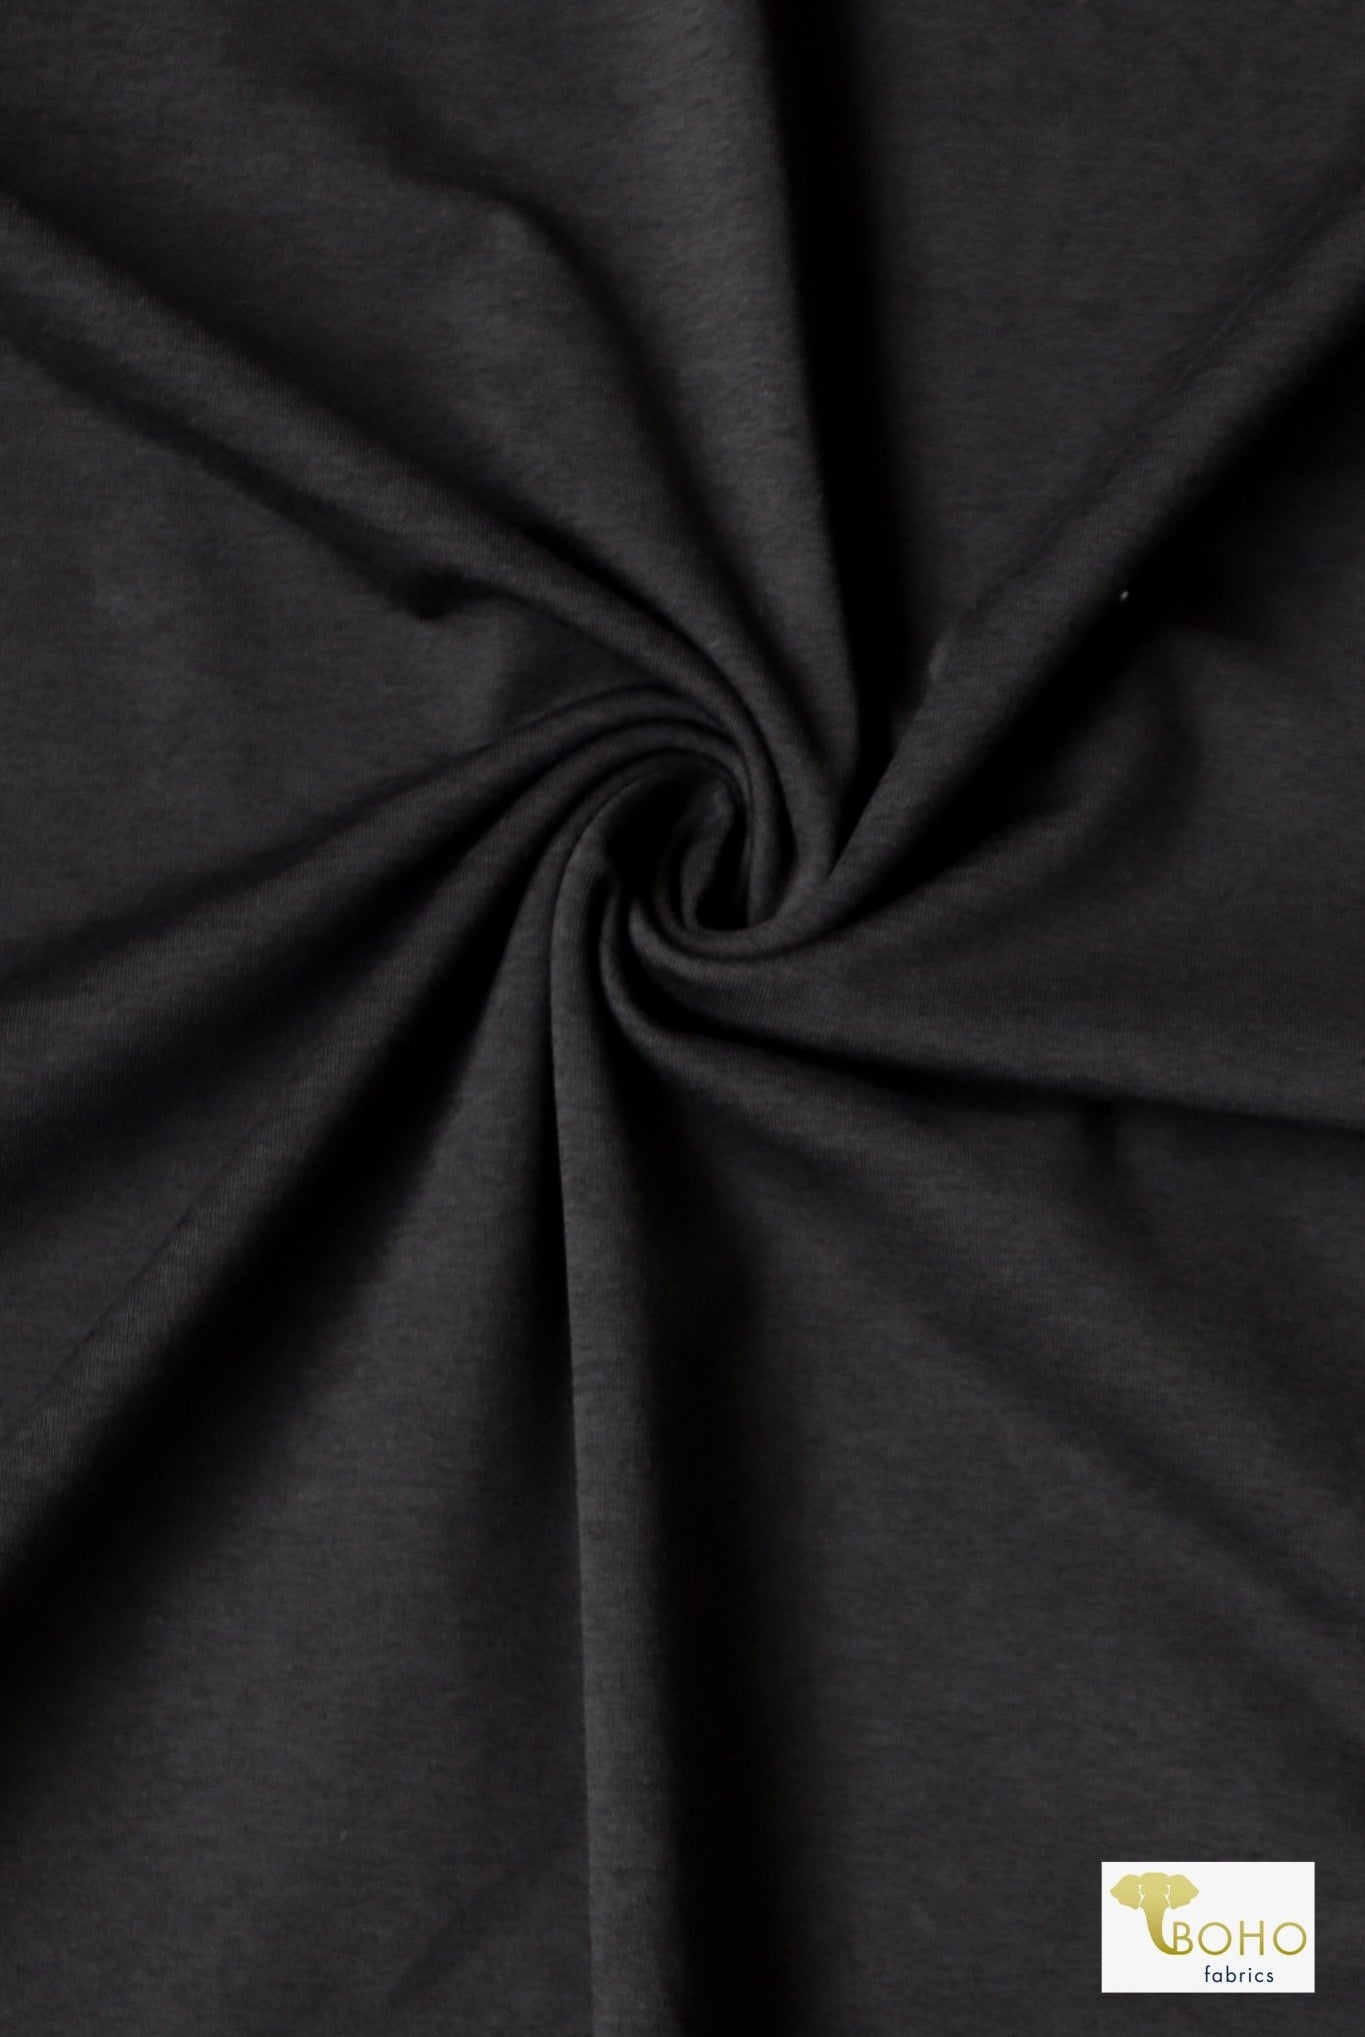 Obsidian Space Dye, Athletic Knit - Boho Fabrics